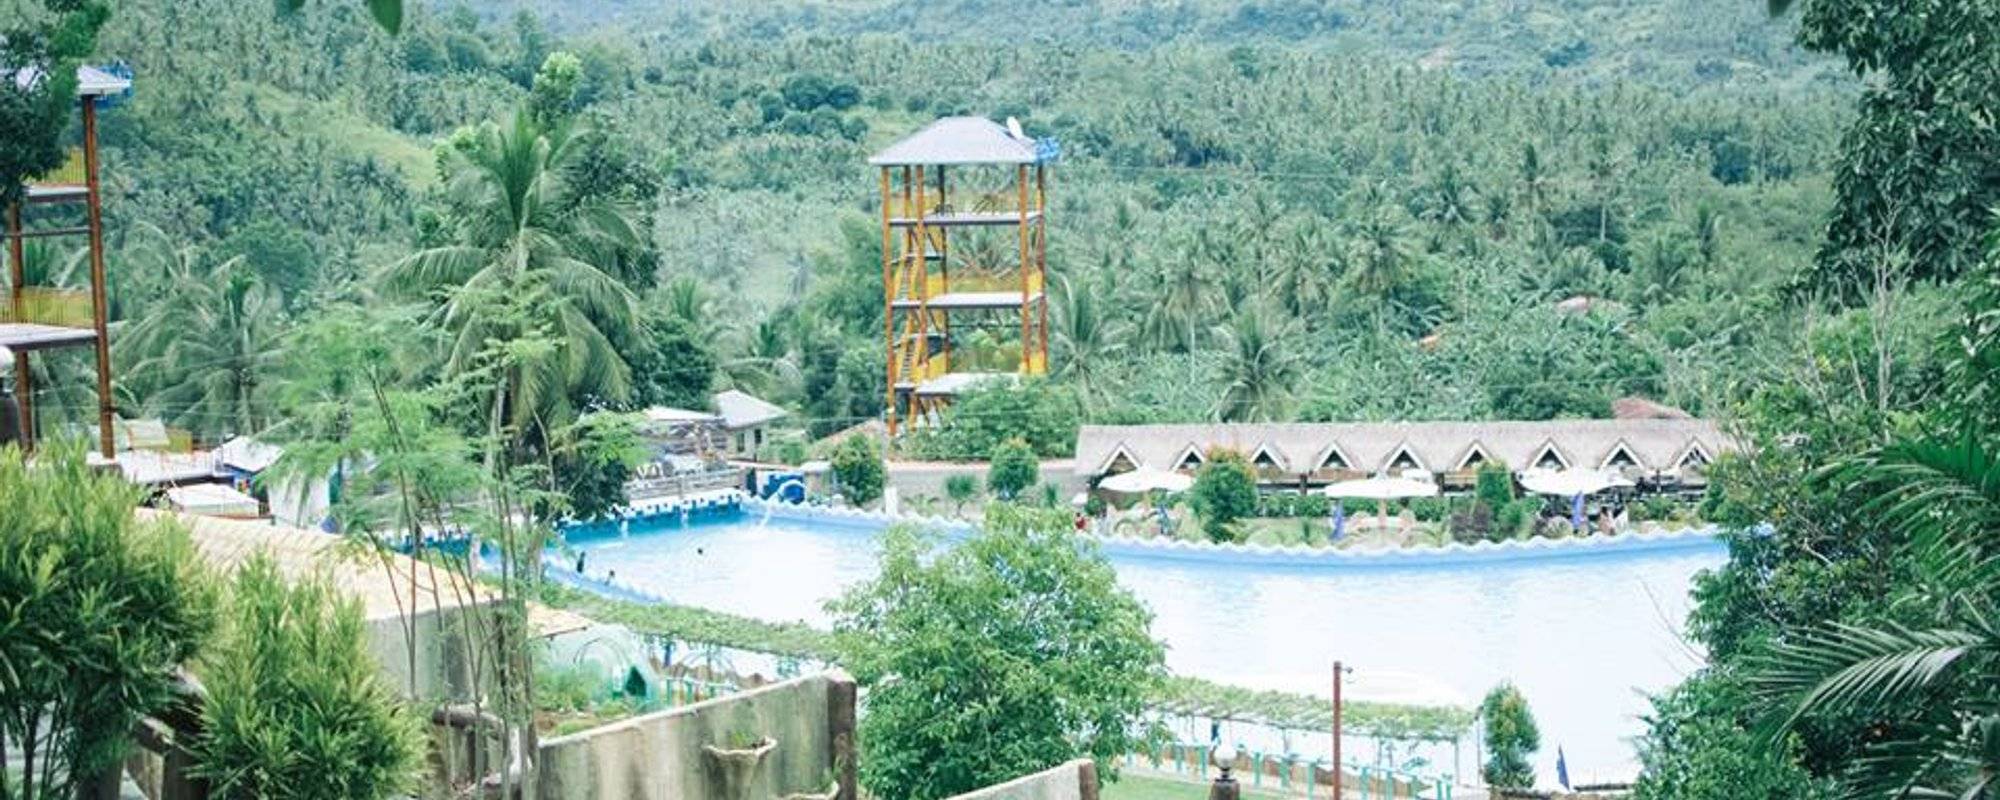 Hidden Valley Wave Pool Resort | Summer Time Suggestion